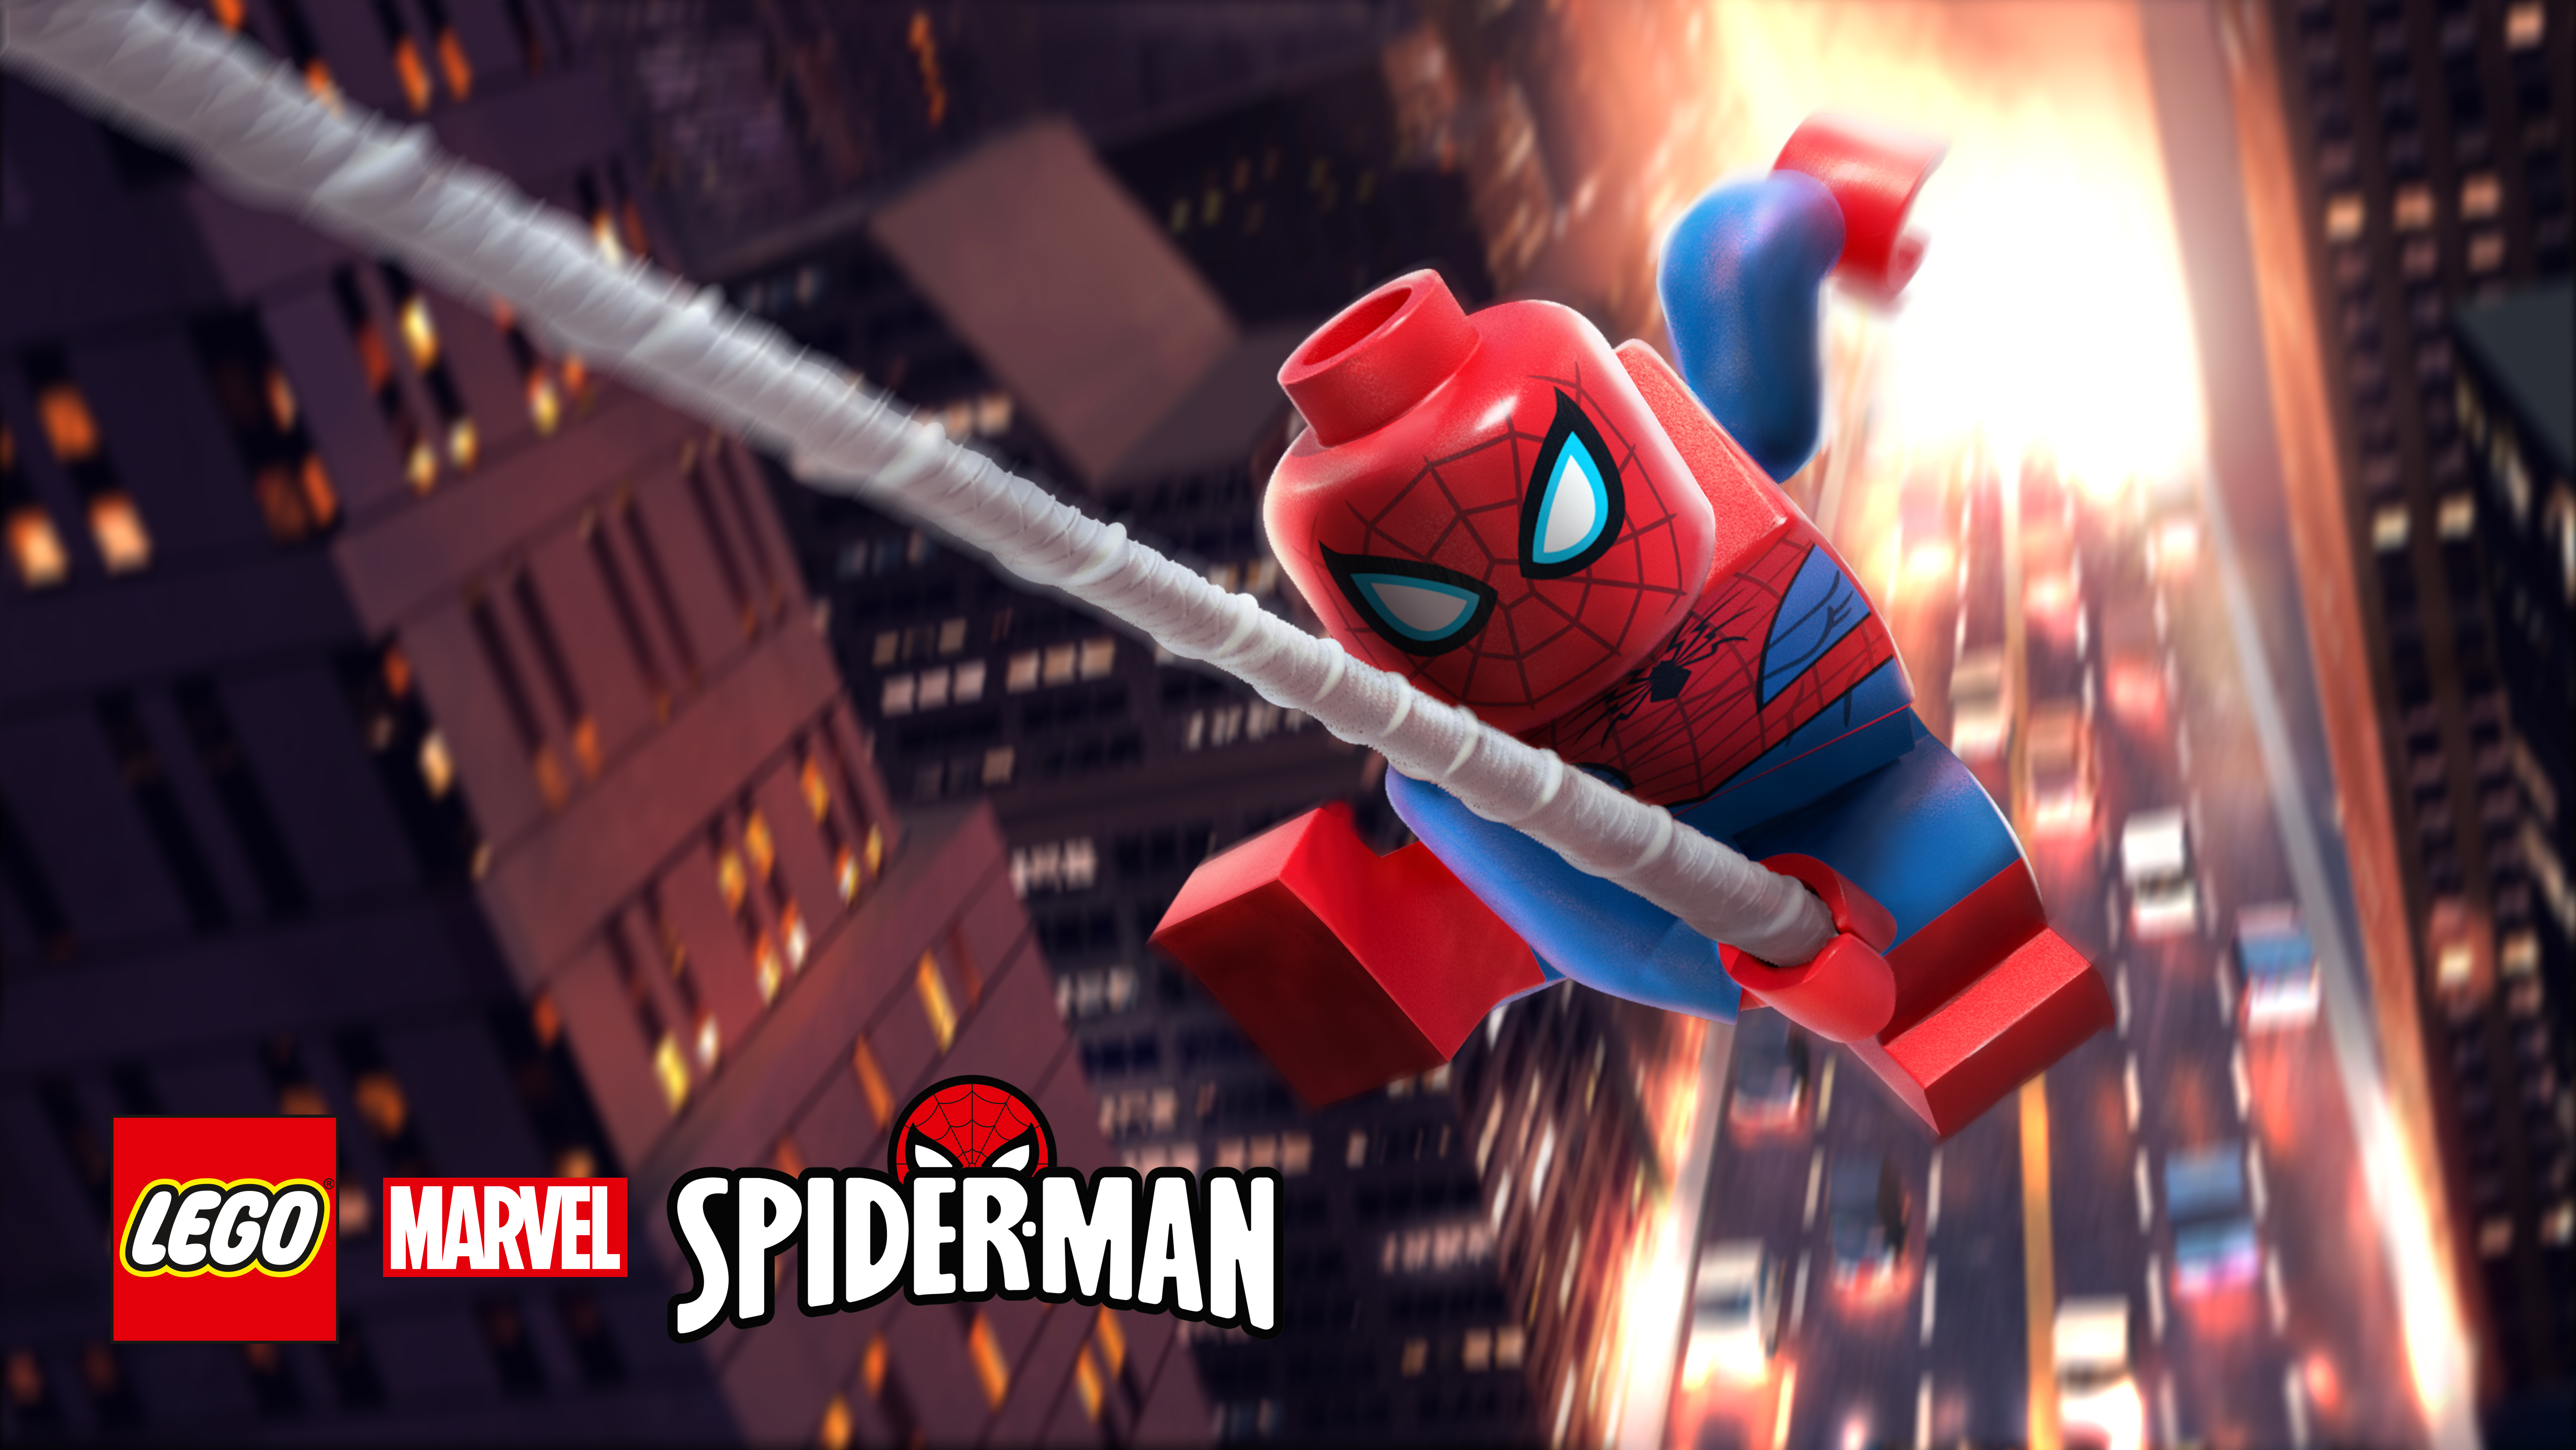 LEGO Marvel SpiderMan Vexed by Venom Announced